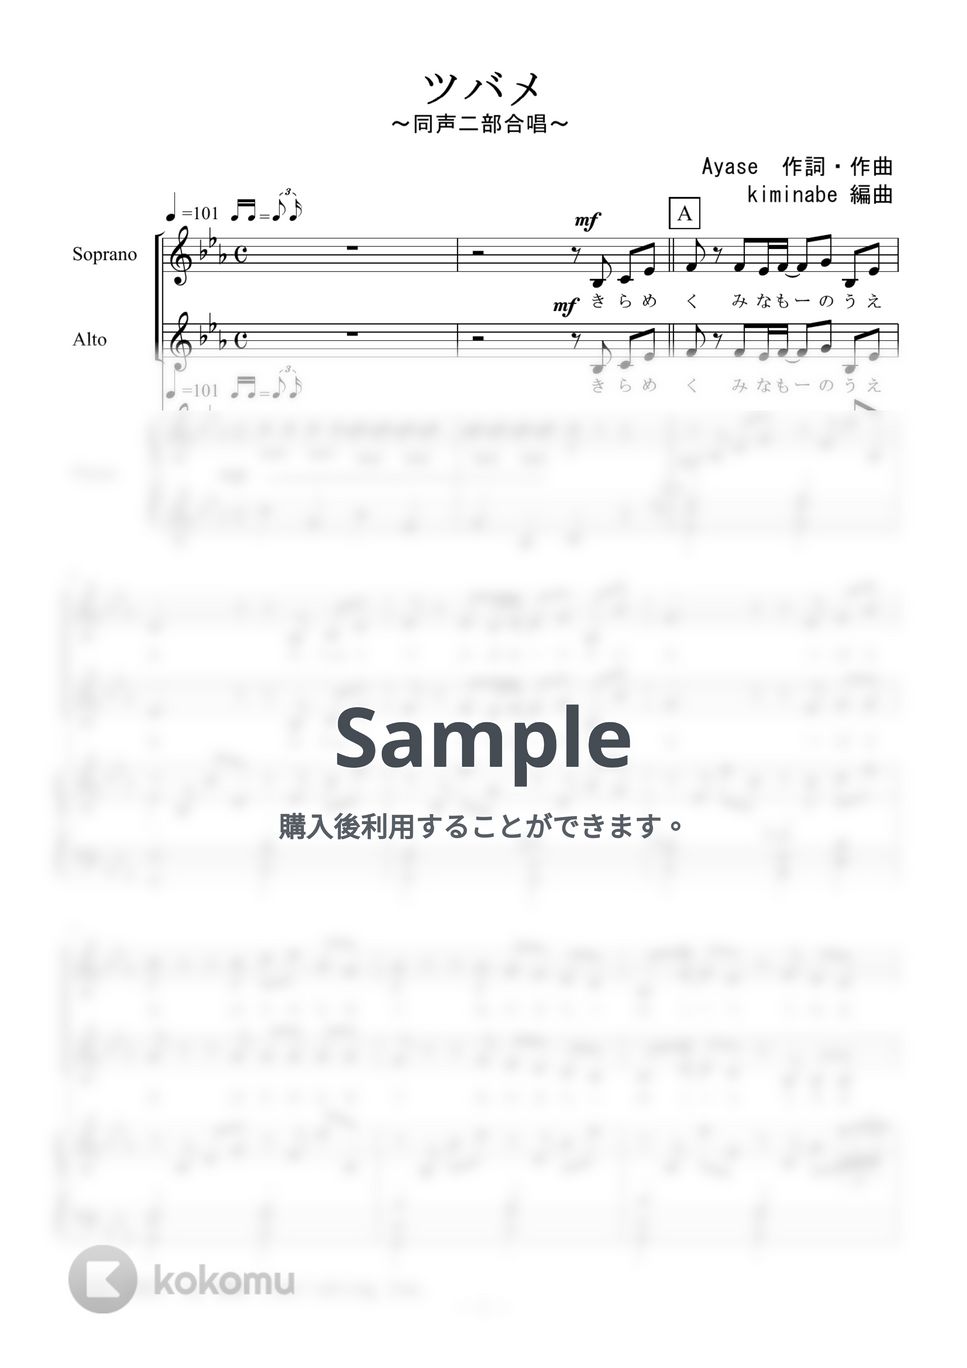 YOASOBI - ツバメ (同声二部合唱) by kiminabe